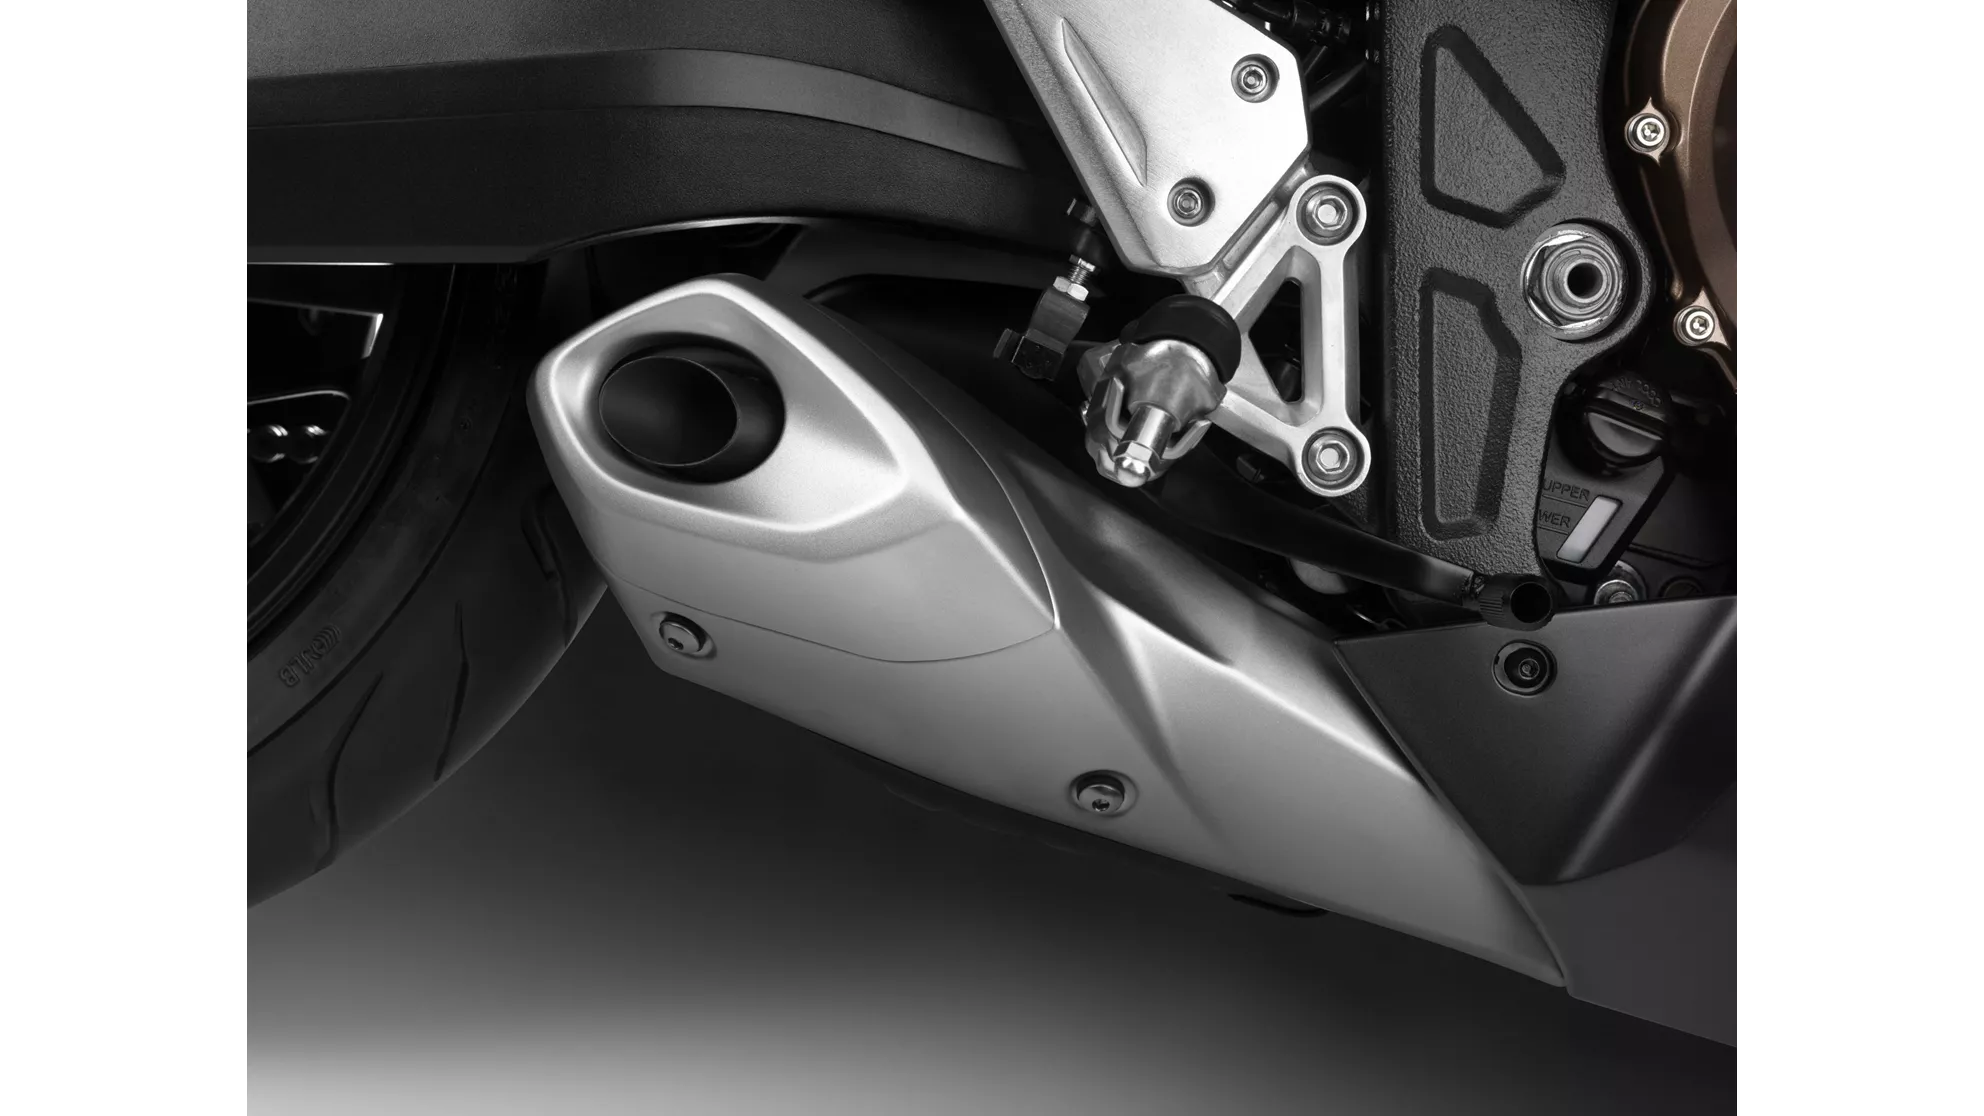 Honda CB650F - Image 5